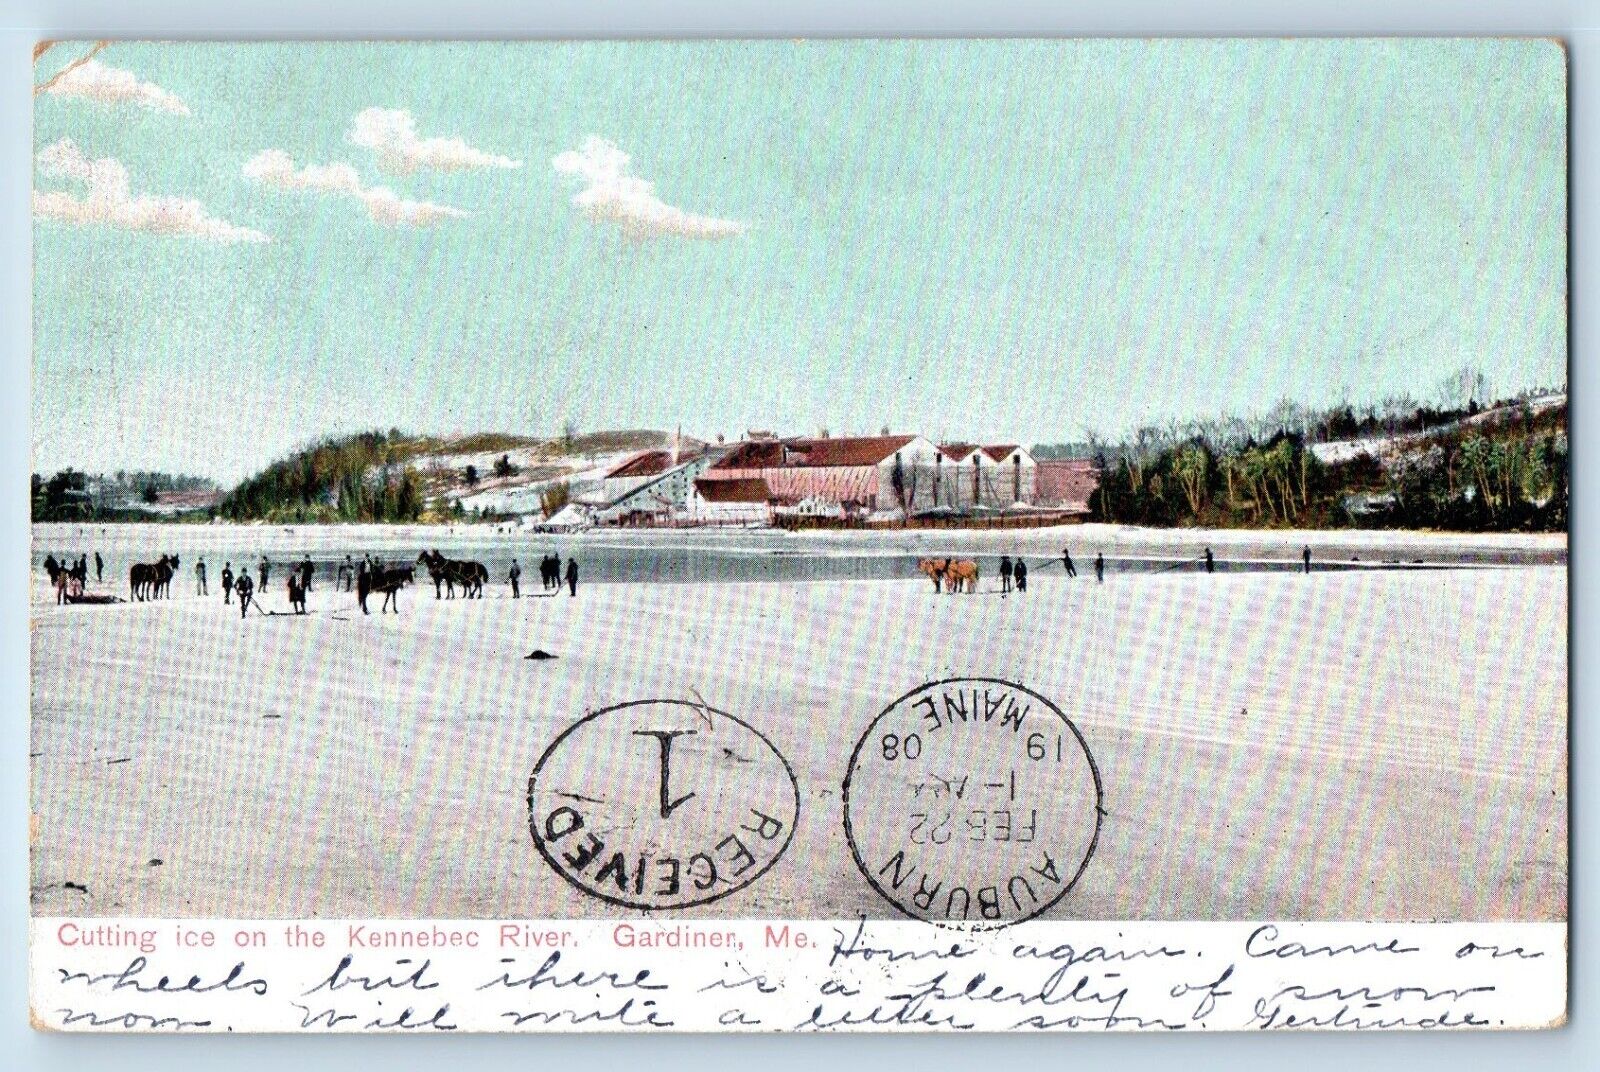 Gardiner Maine Postcard Cutting Ice Kennebec River Exterior 1908 Vintage Antique